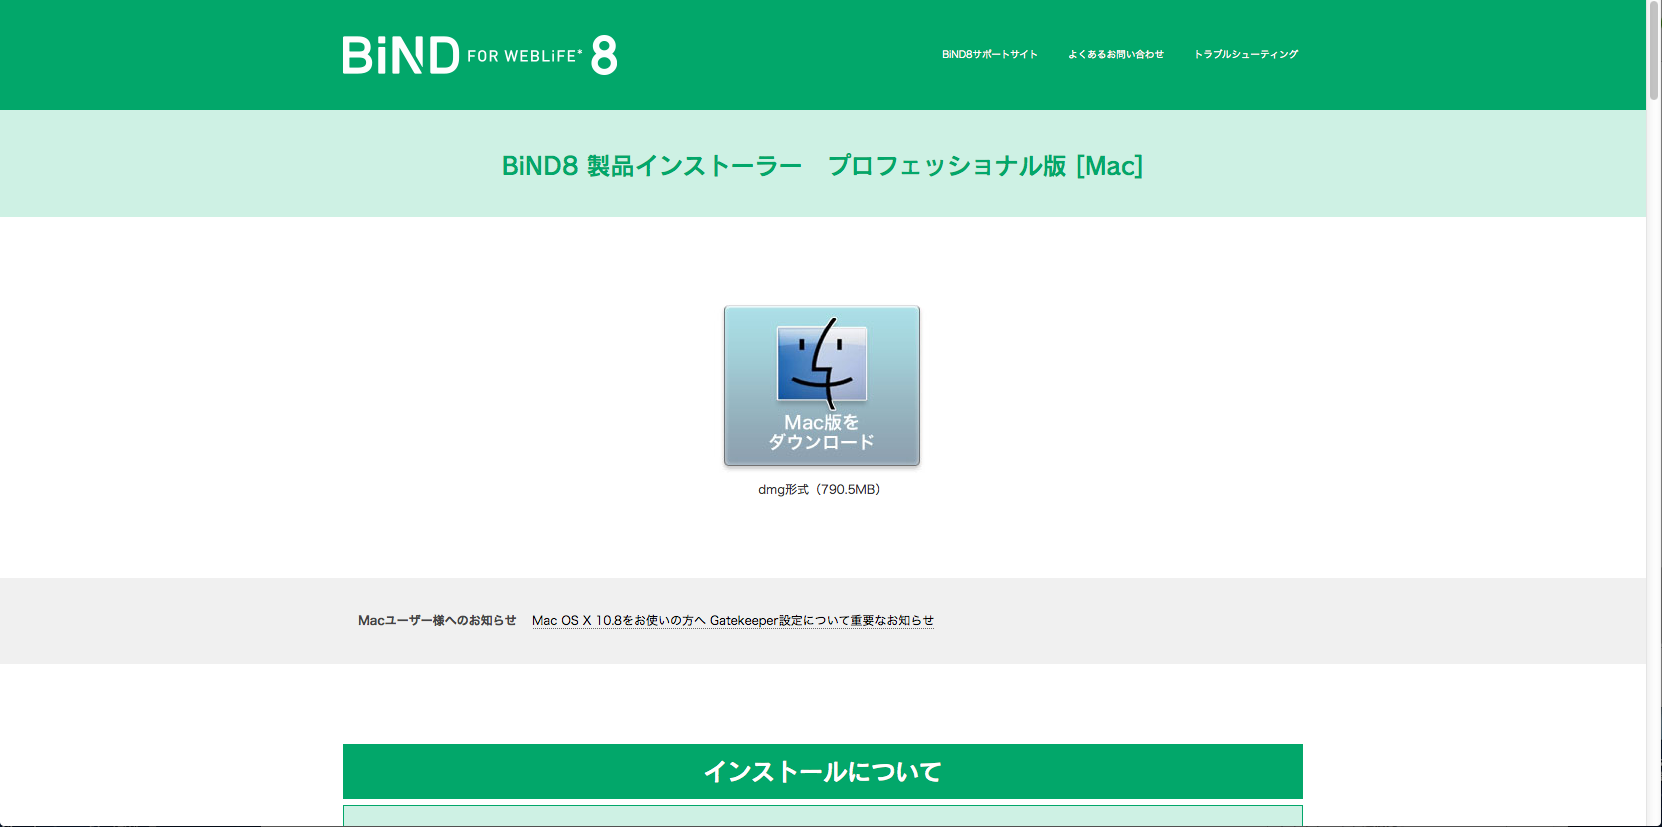 http://www.digitalstage.jp/support/bind8/manual/01-02-02-02.png